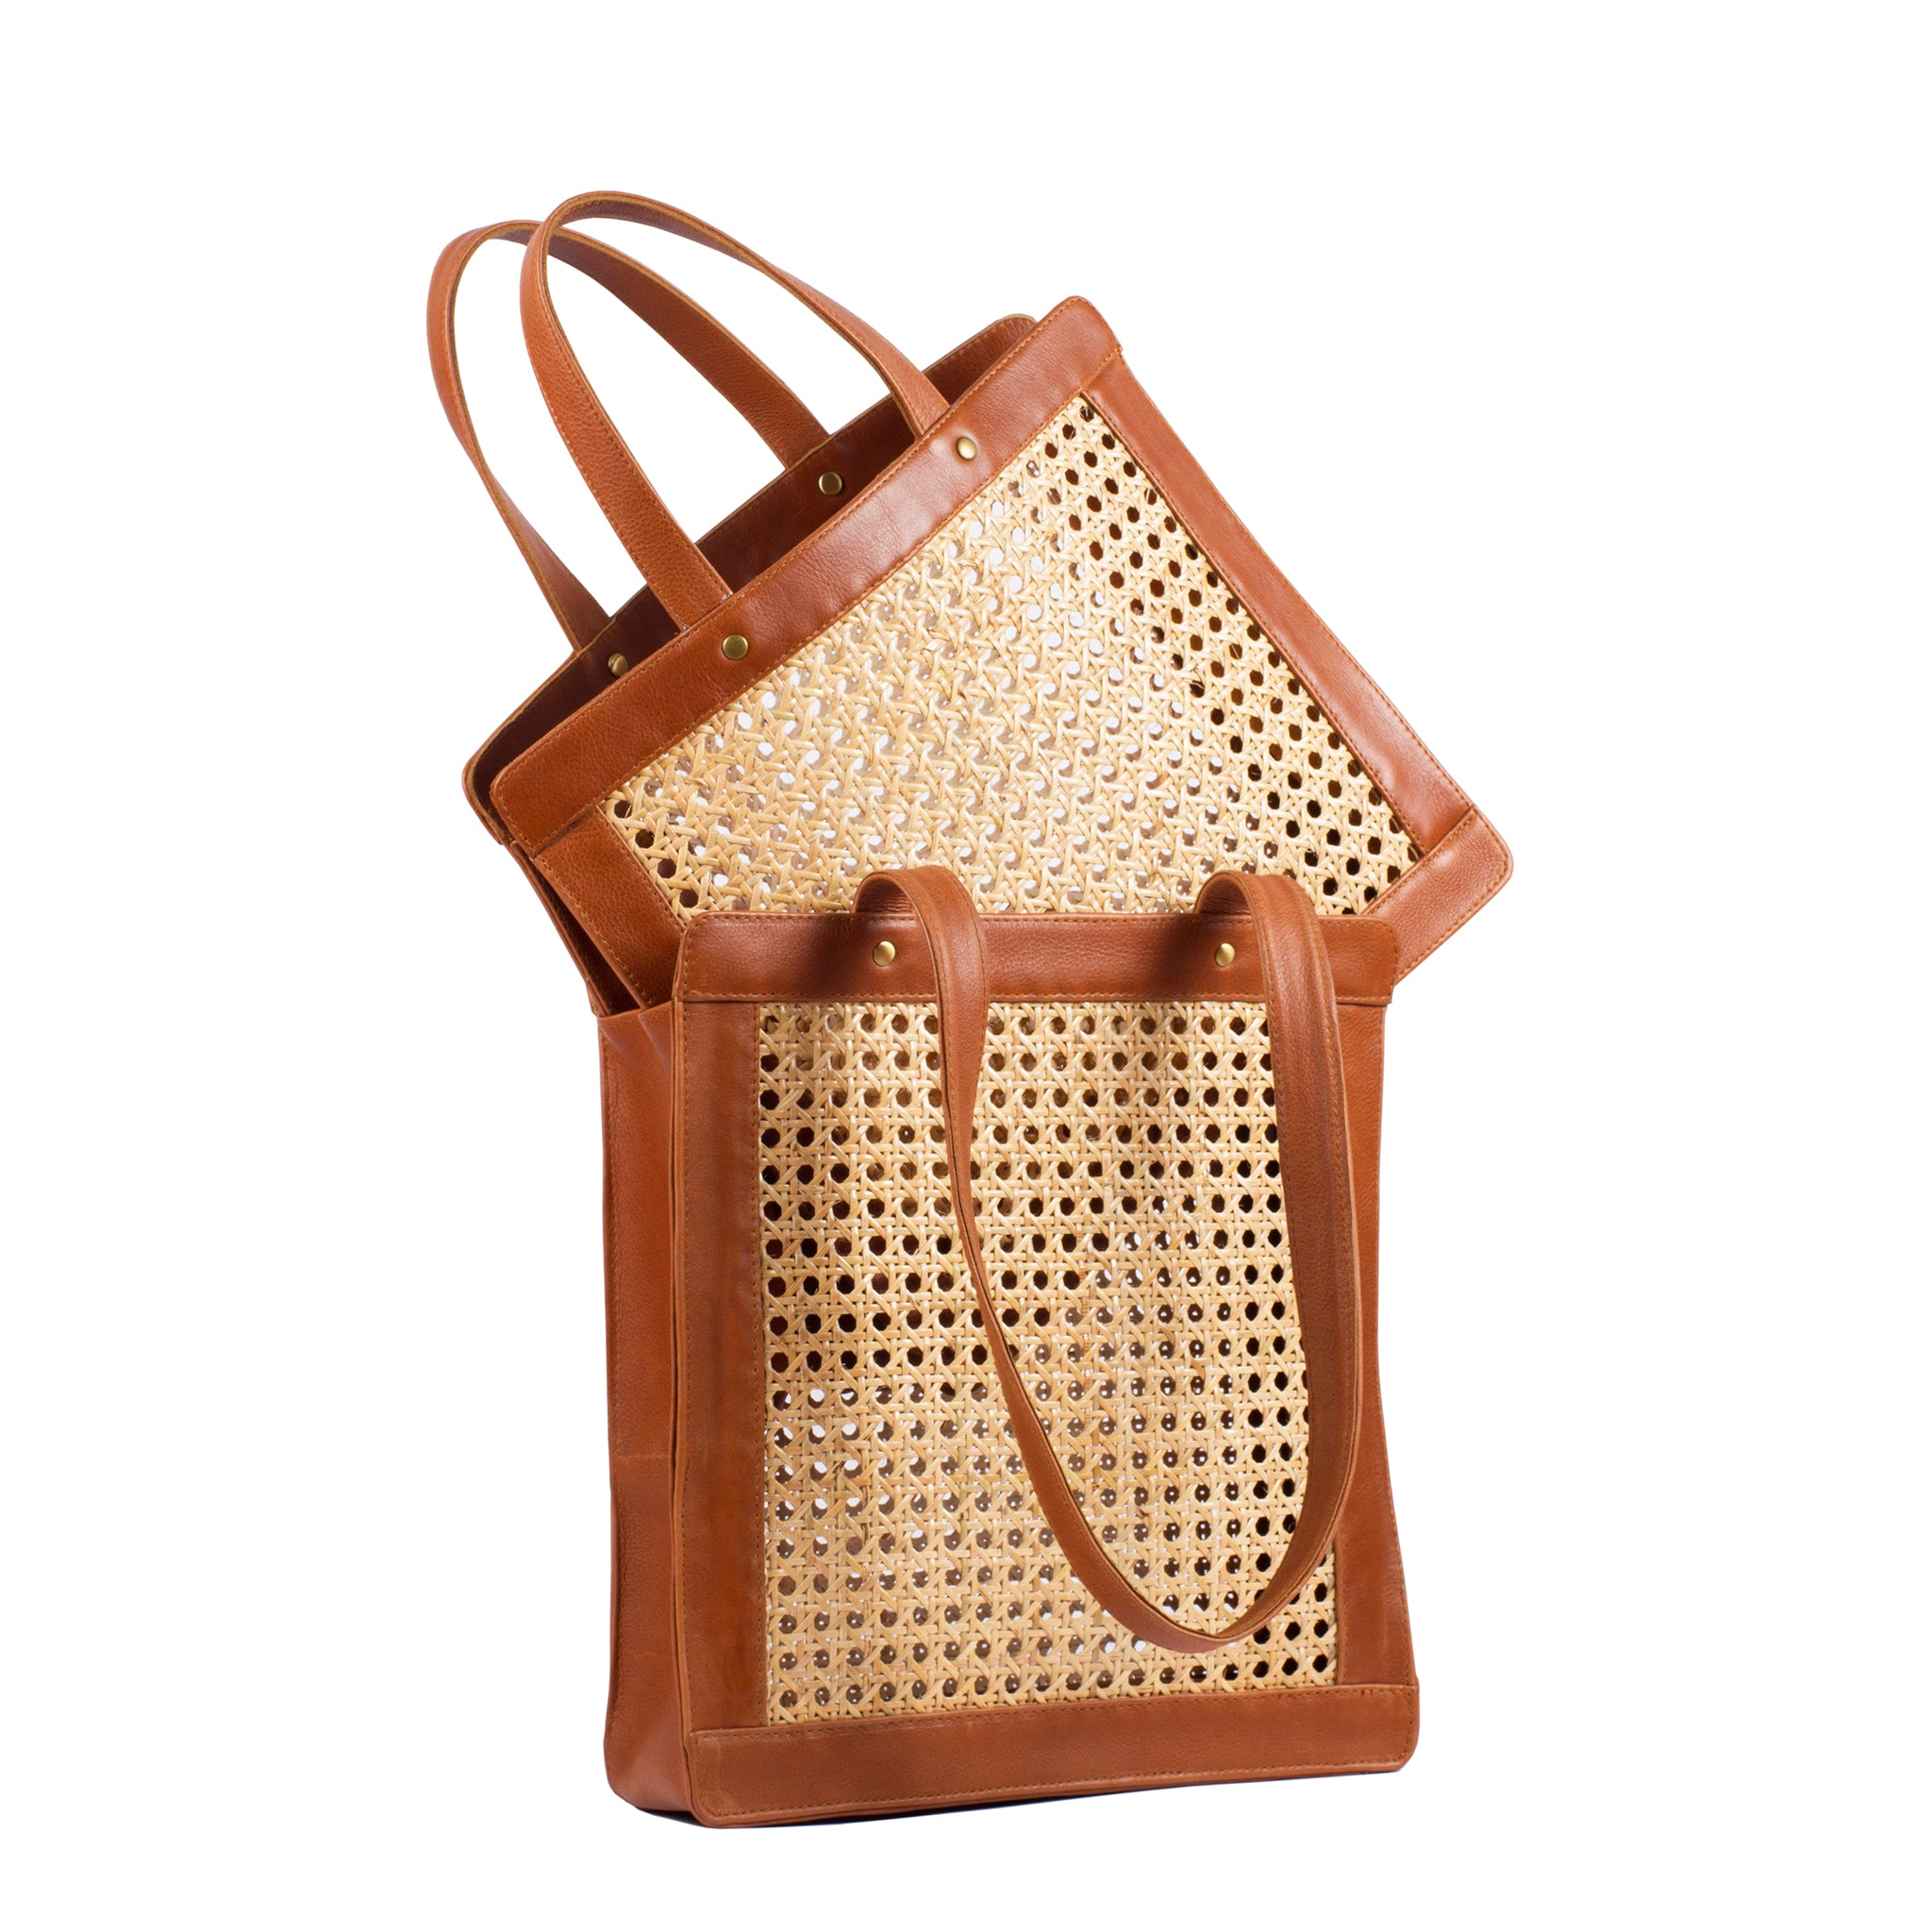 Wicker and Woven Basket Bags; Bag Trend 2019; Summer Rattan Handbags for Women